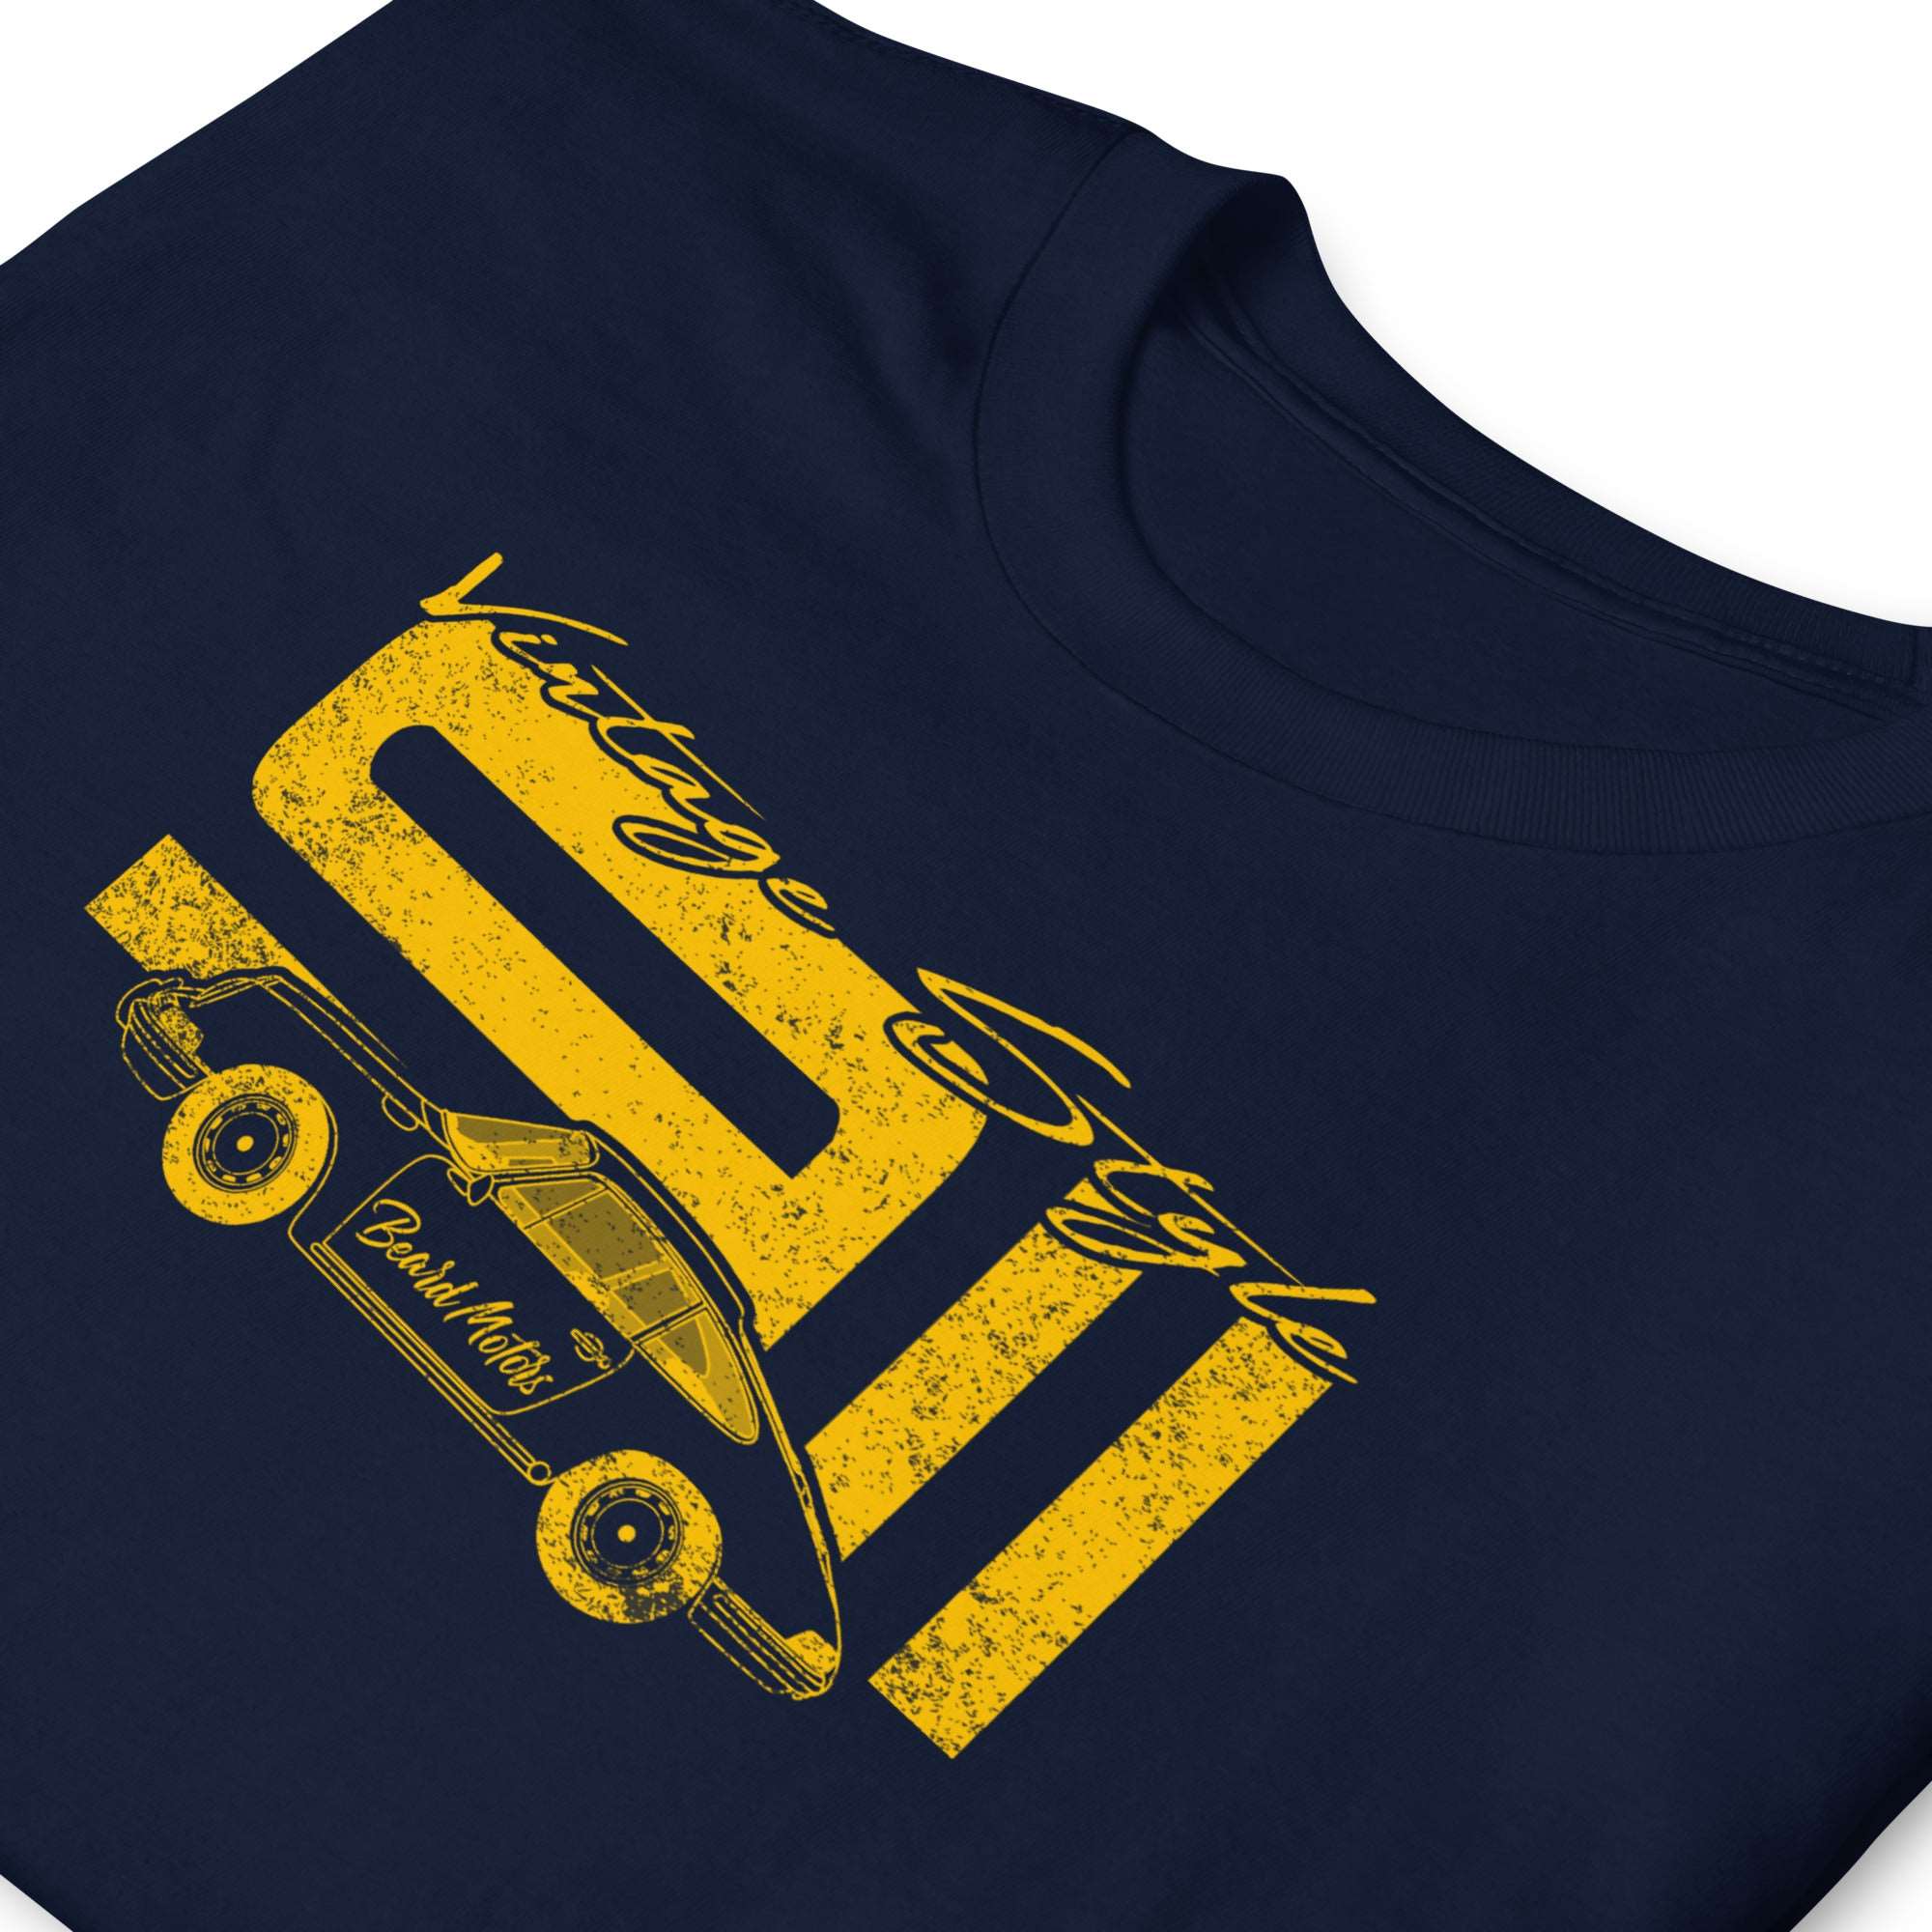 Beard Motors T-Shirt 911 Vintage Style Navy - Bahama